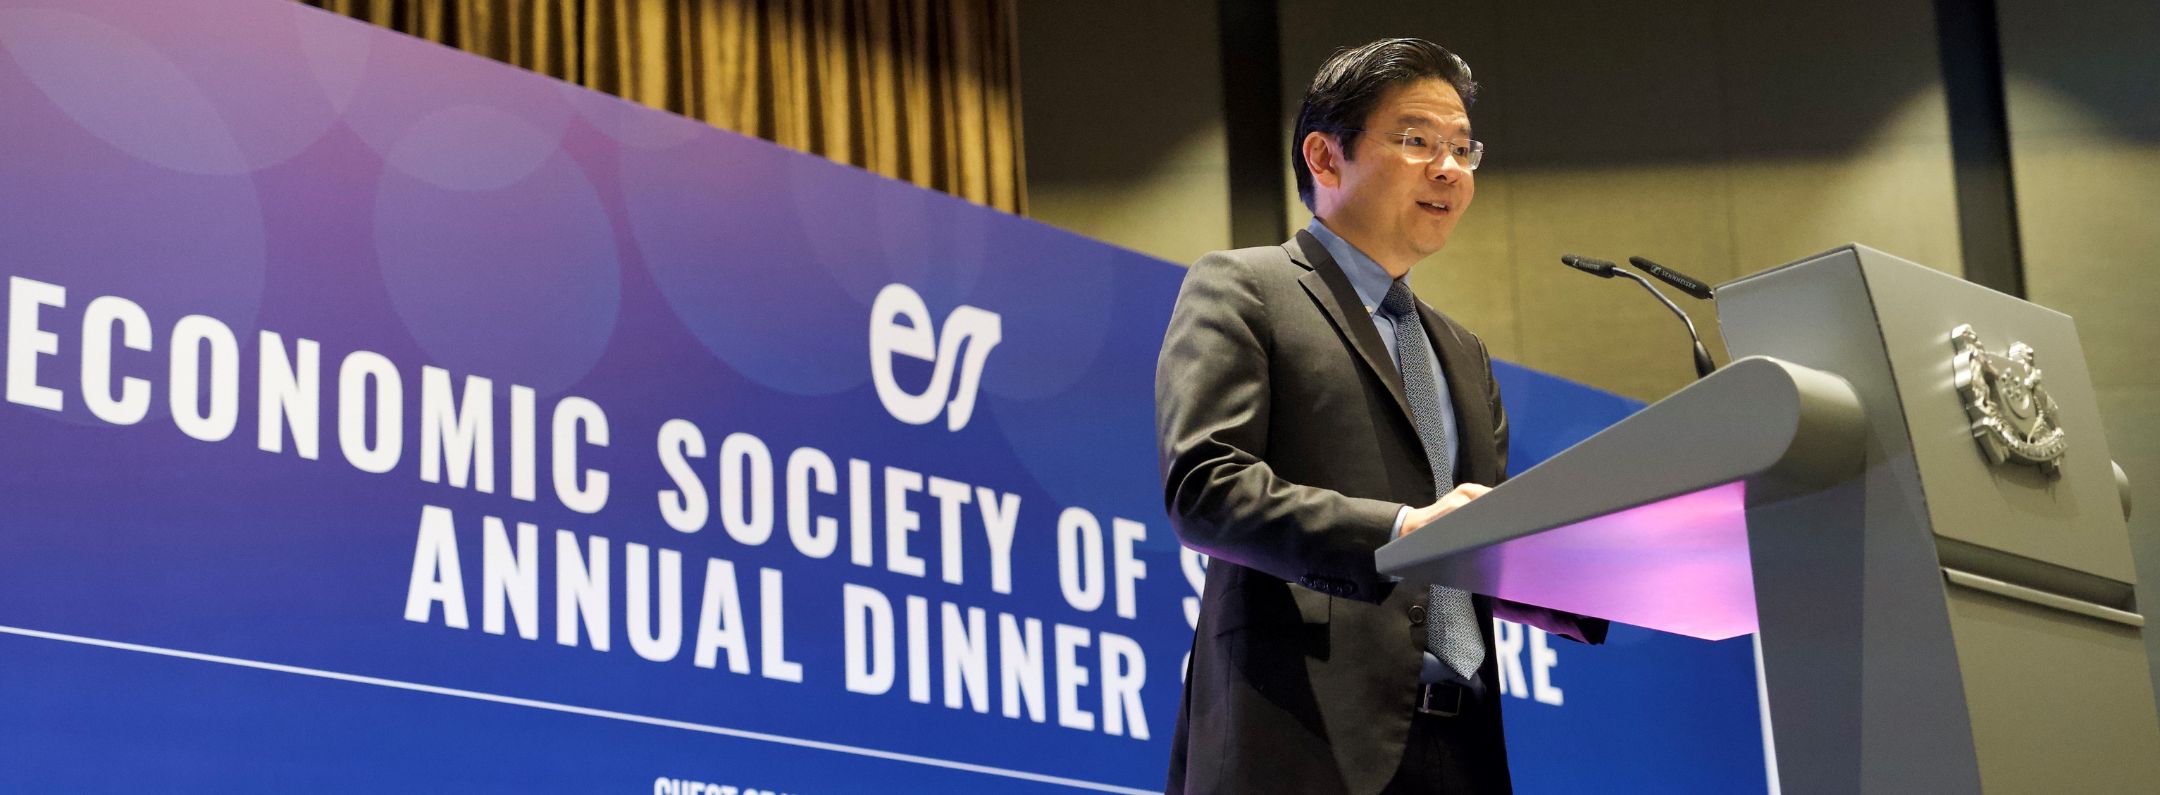 DPM Wong at the Economic Society of Singapore Annual Dinner_Hero jpg